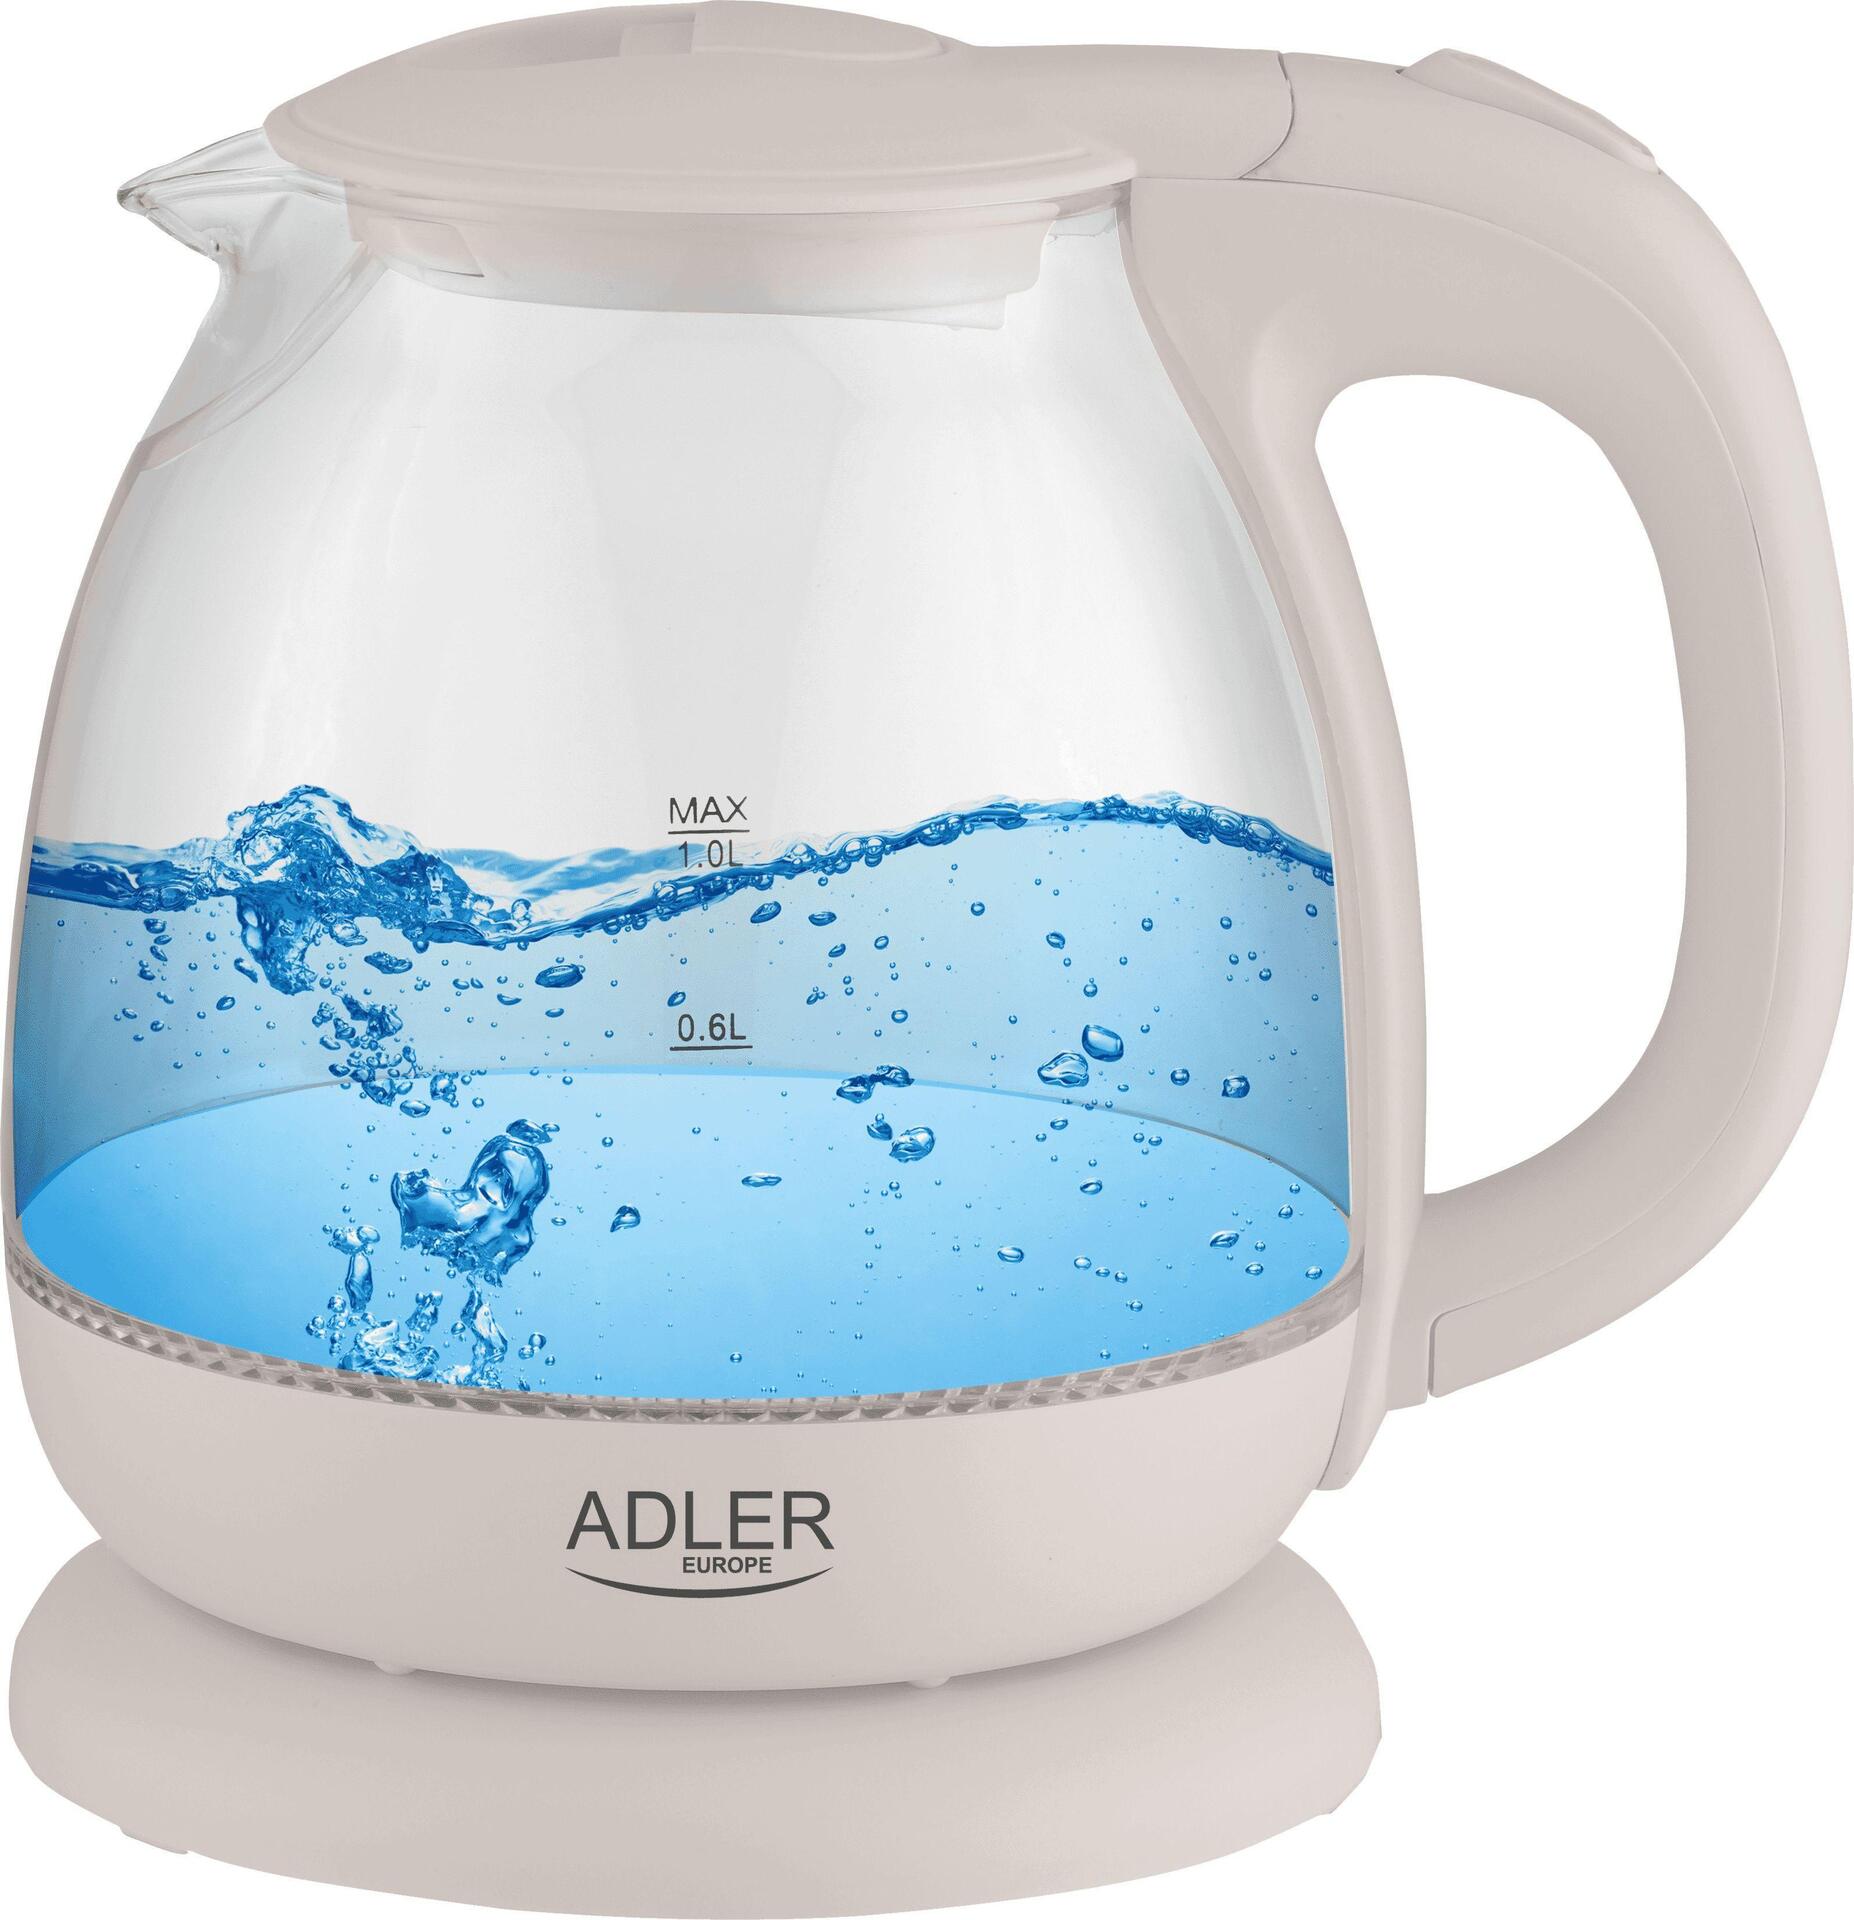 Adler Wasserkocher AD 1283C elektrisch, 900 W, 1 l, Glas/Edelstahl, 360° drehbarer Sockel, cremefarben (AD 1283C)